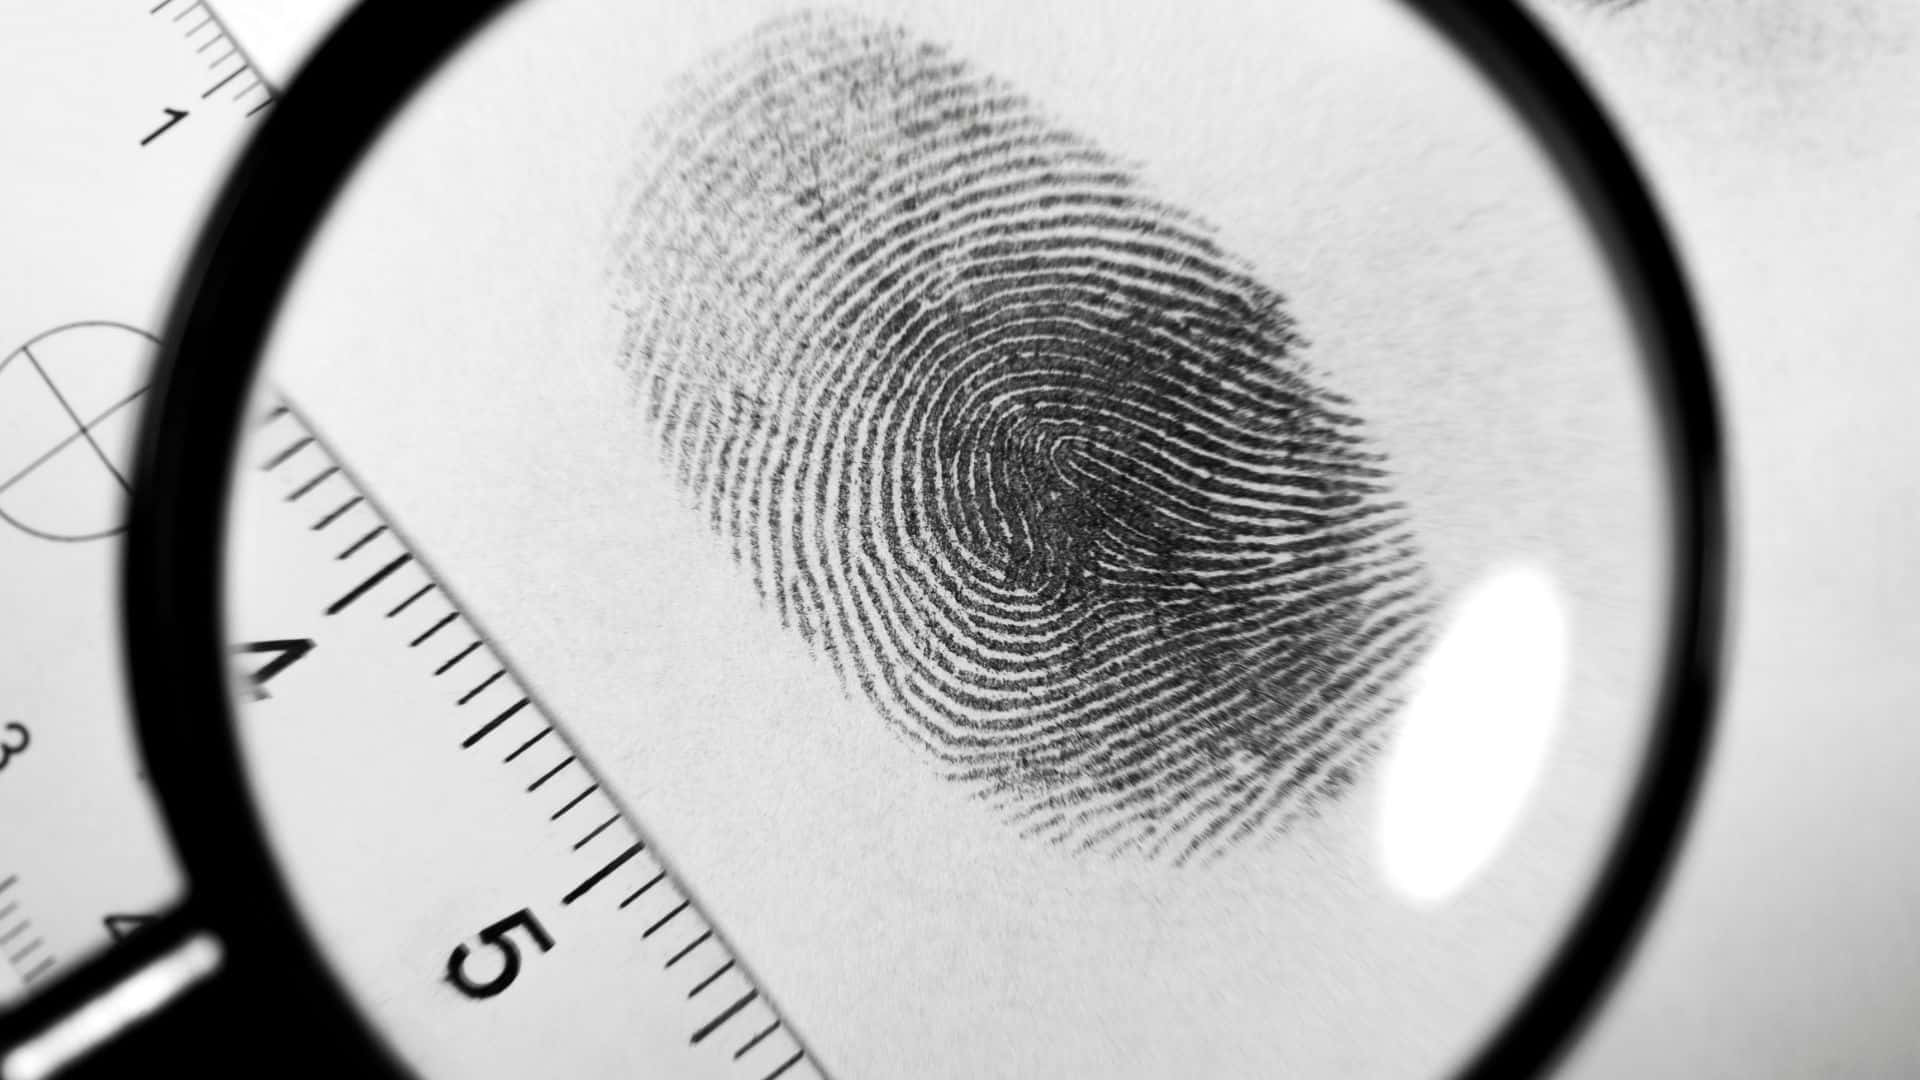 Caption: High-resolution image of a unique fingerprint pattern